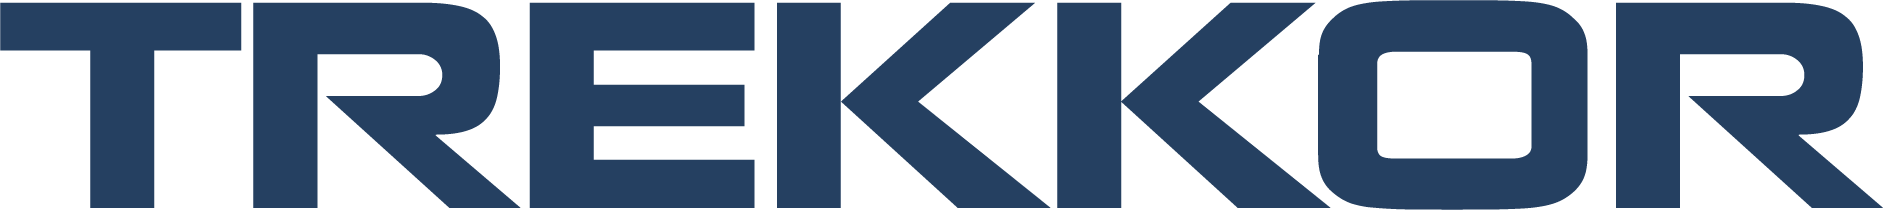 Trekkor Company Logotype Blue Png